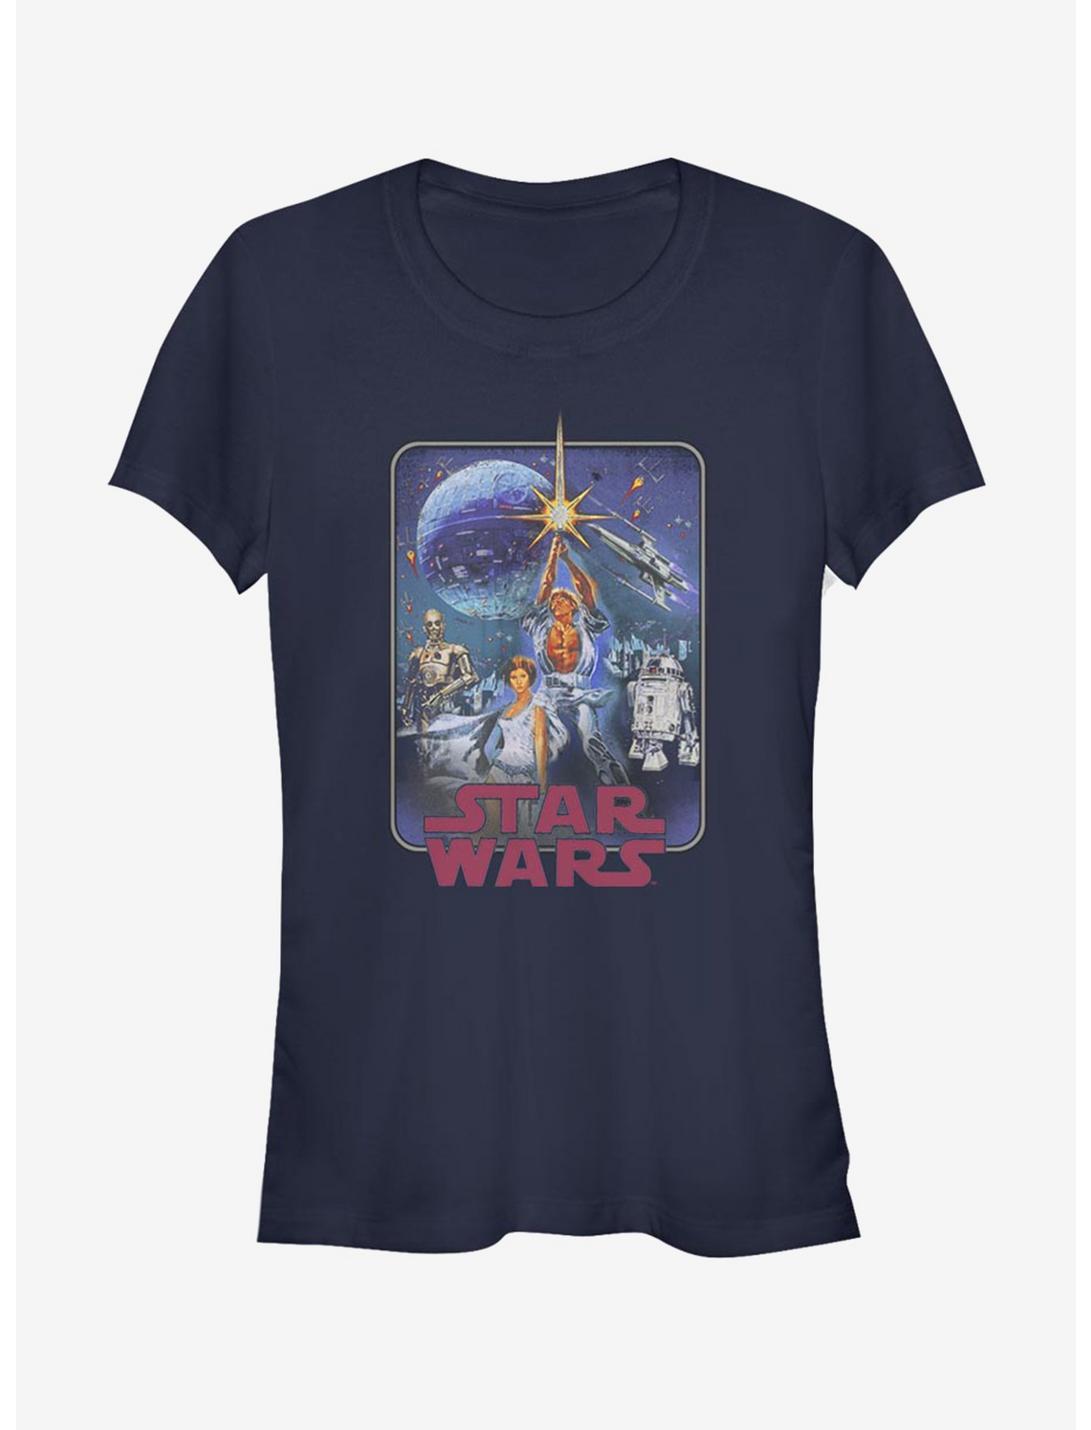 Star Wars Episode IV A New Hope Poster Redux Girls T-Shirt, NAVY, hi-res